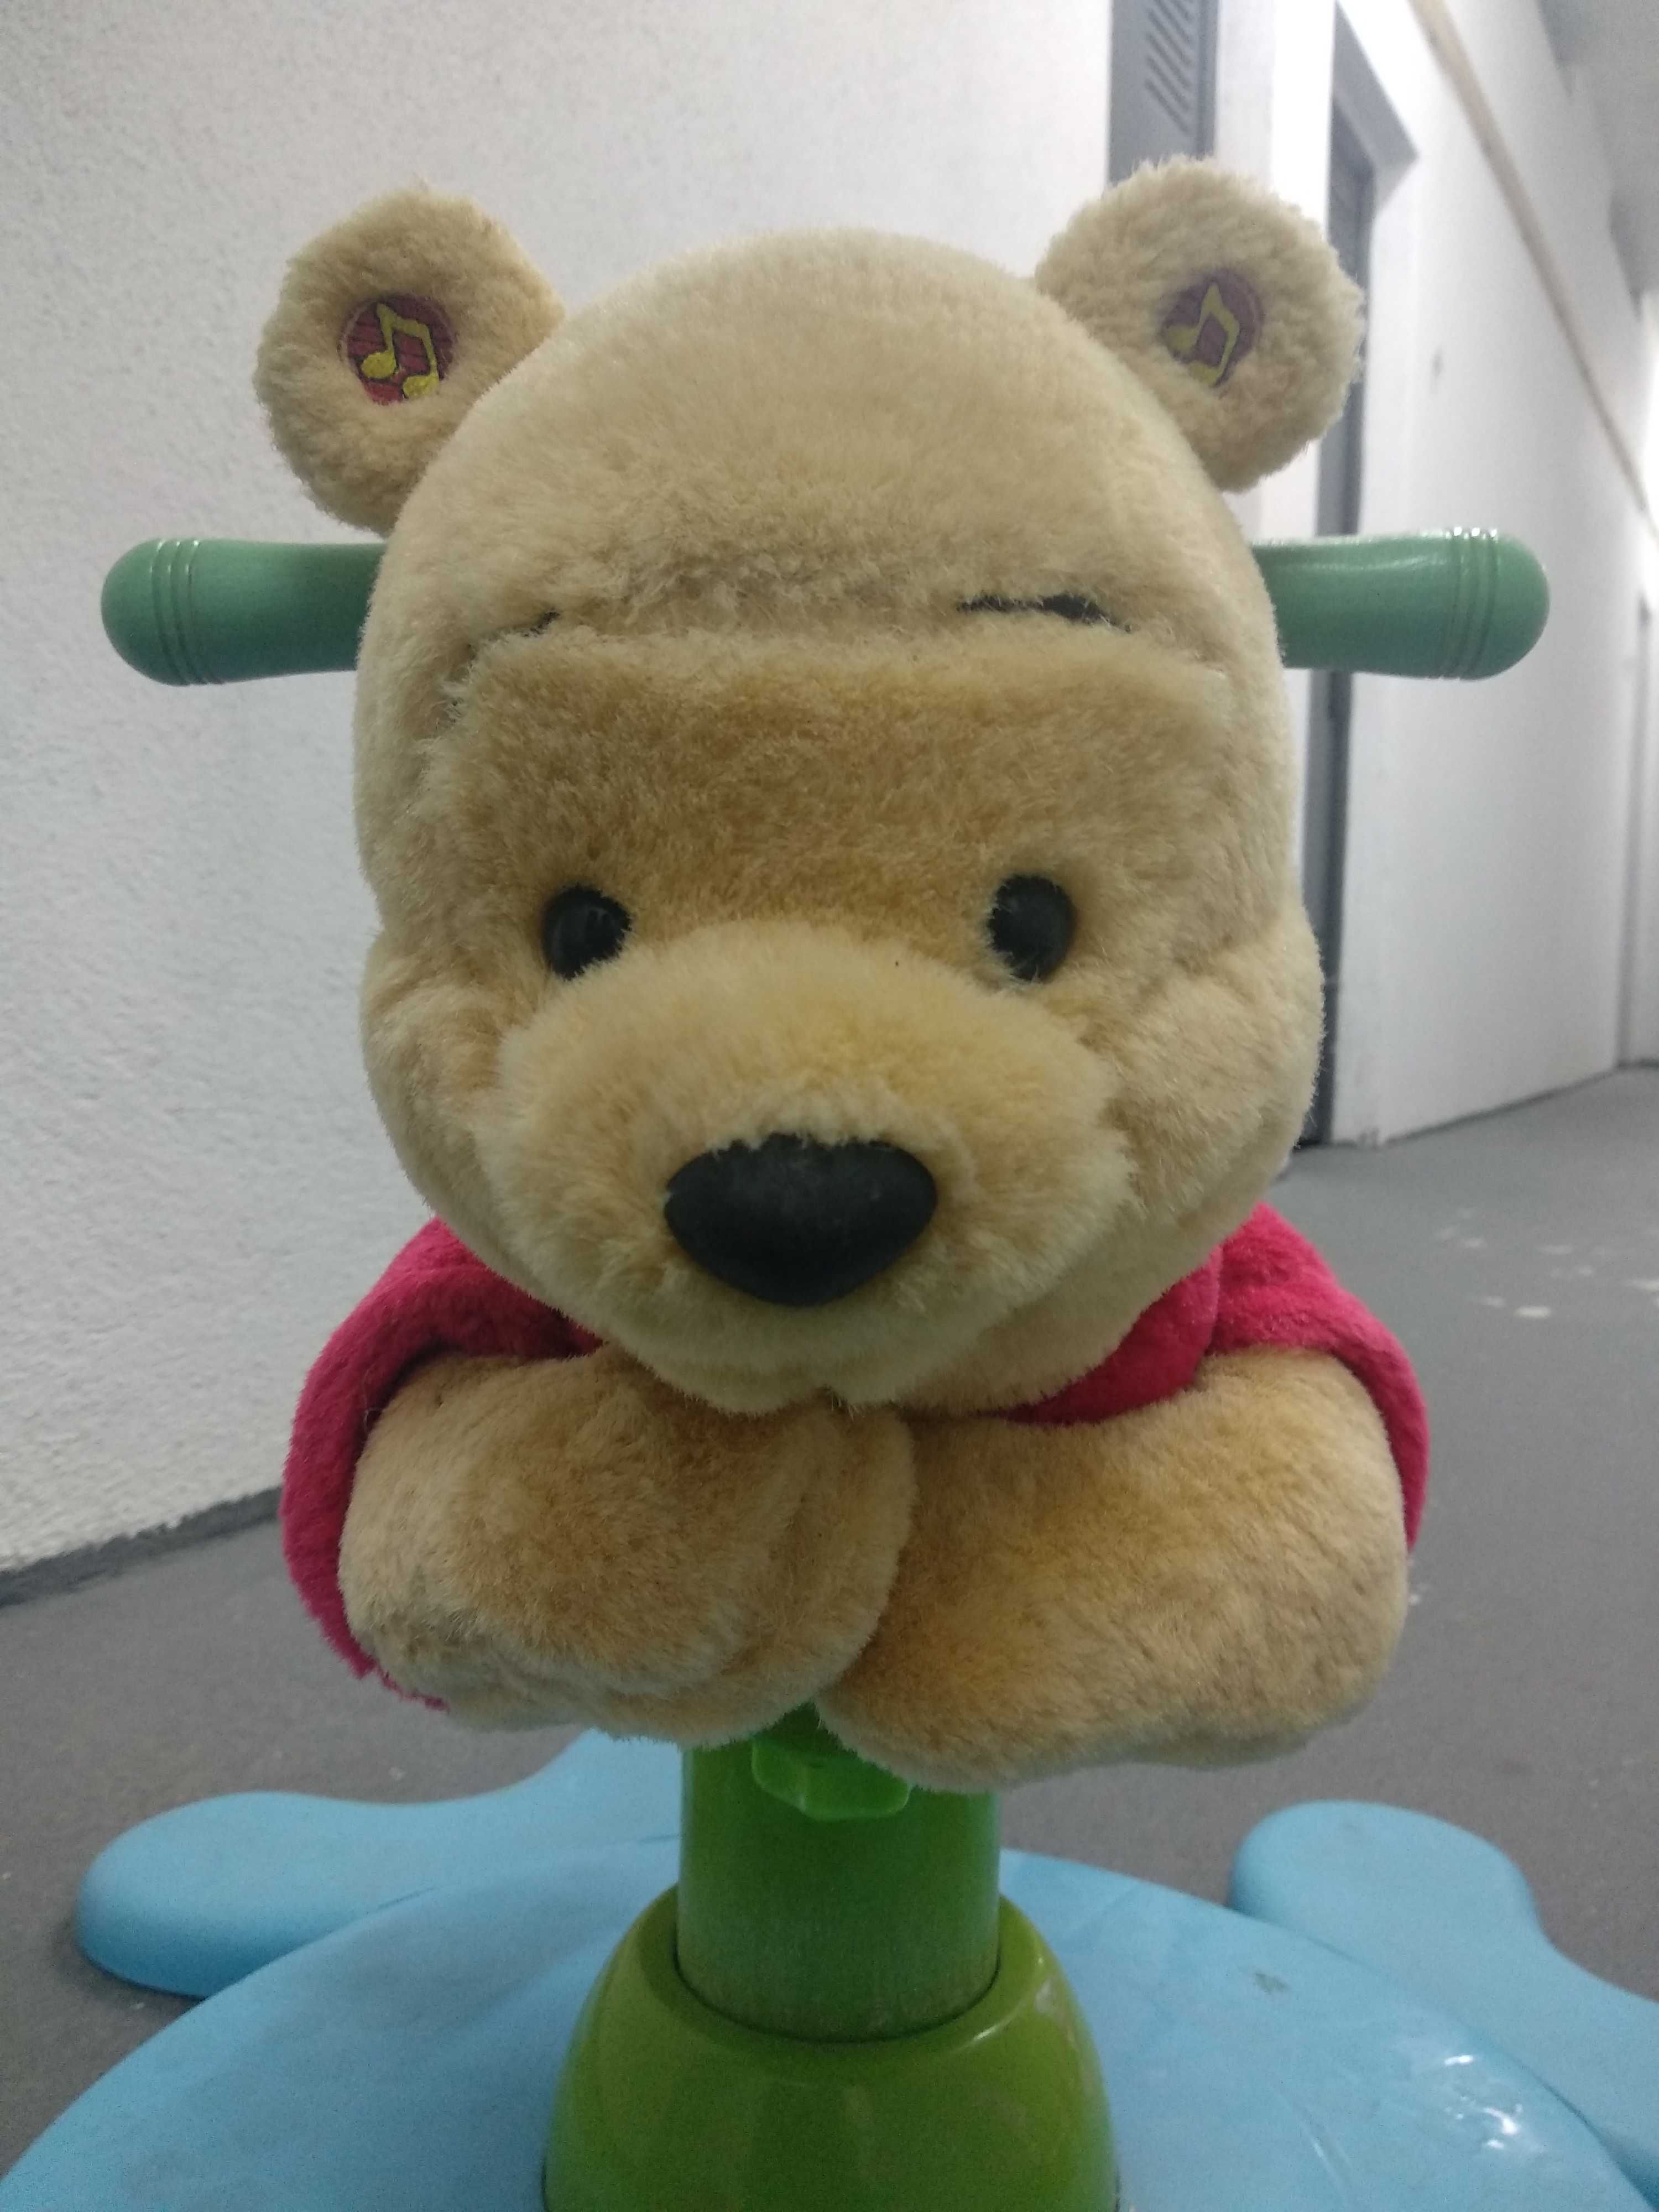 Brinquedo criança "winnie the pooh"